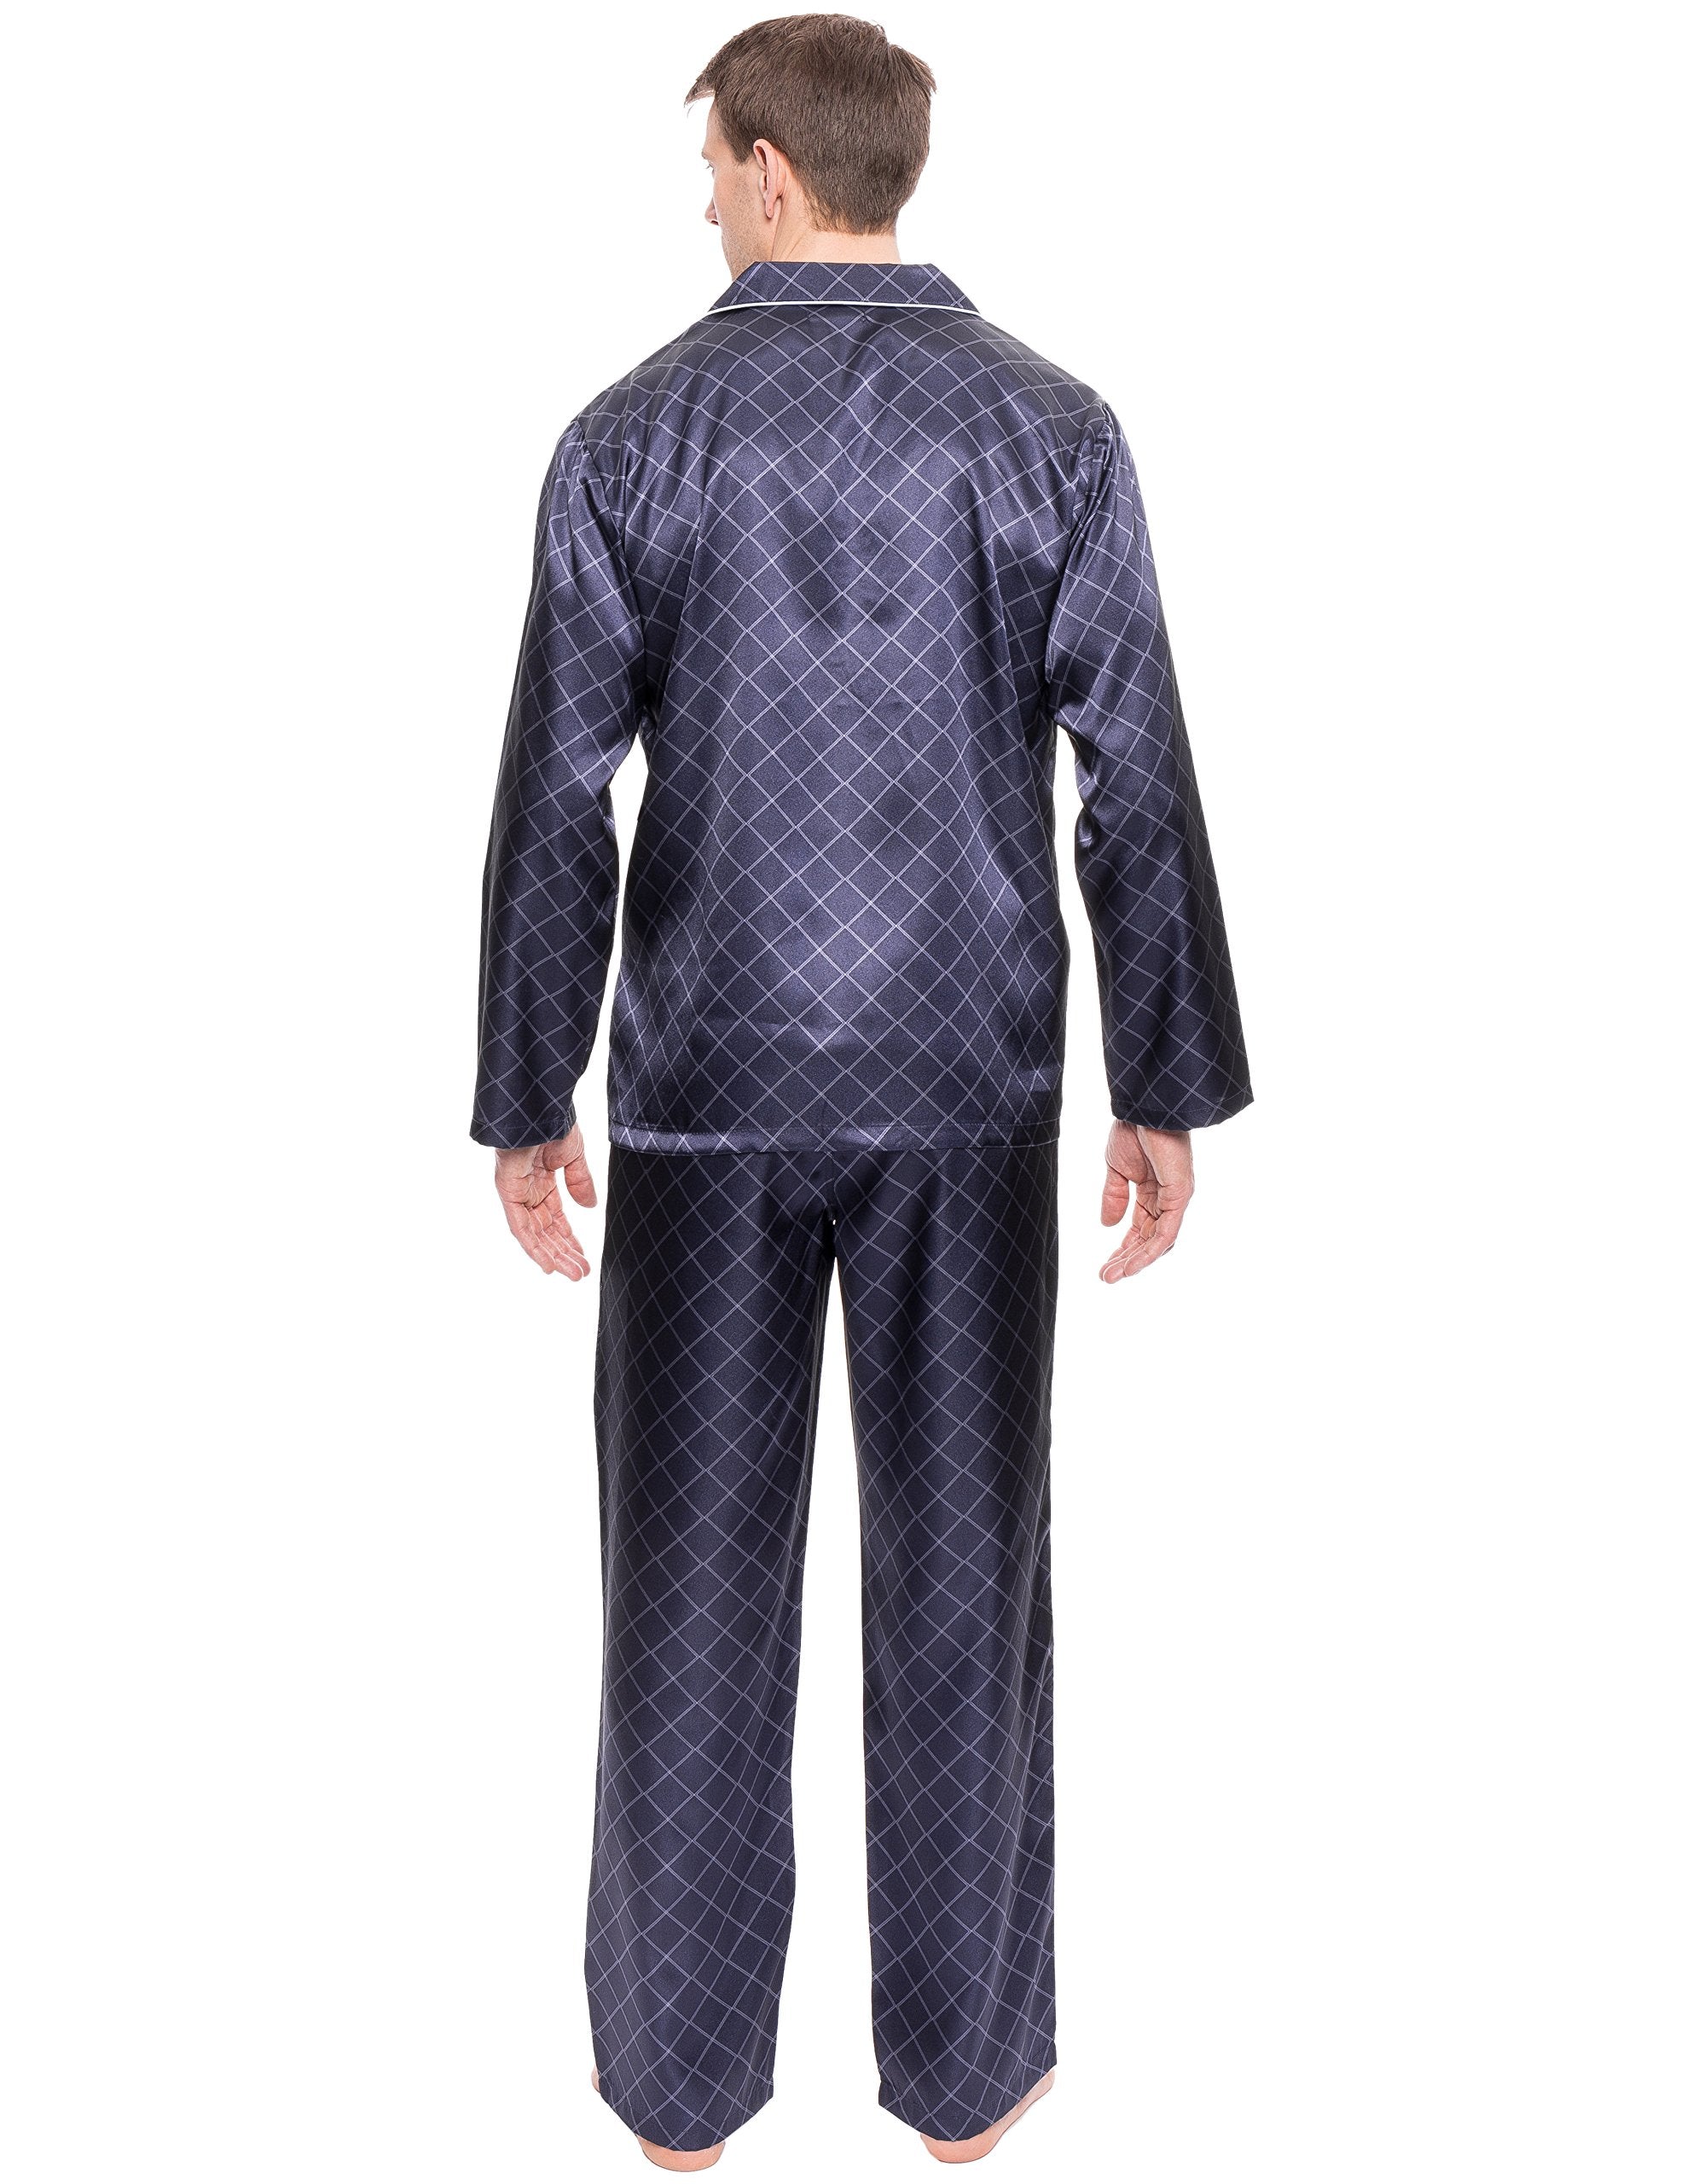 Noble Mount Mens Premium Satin Pajama Sleepwear Set 0125